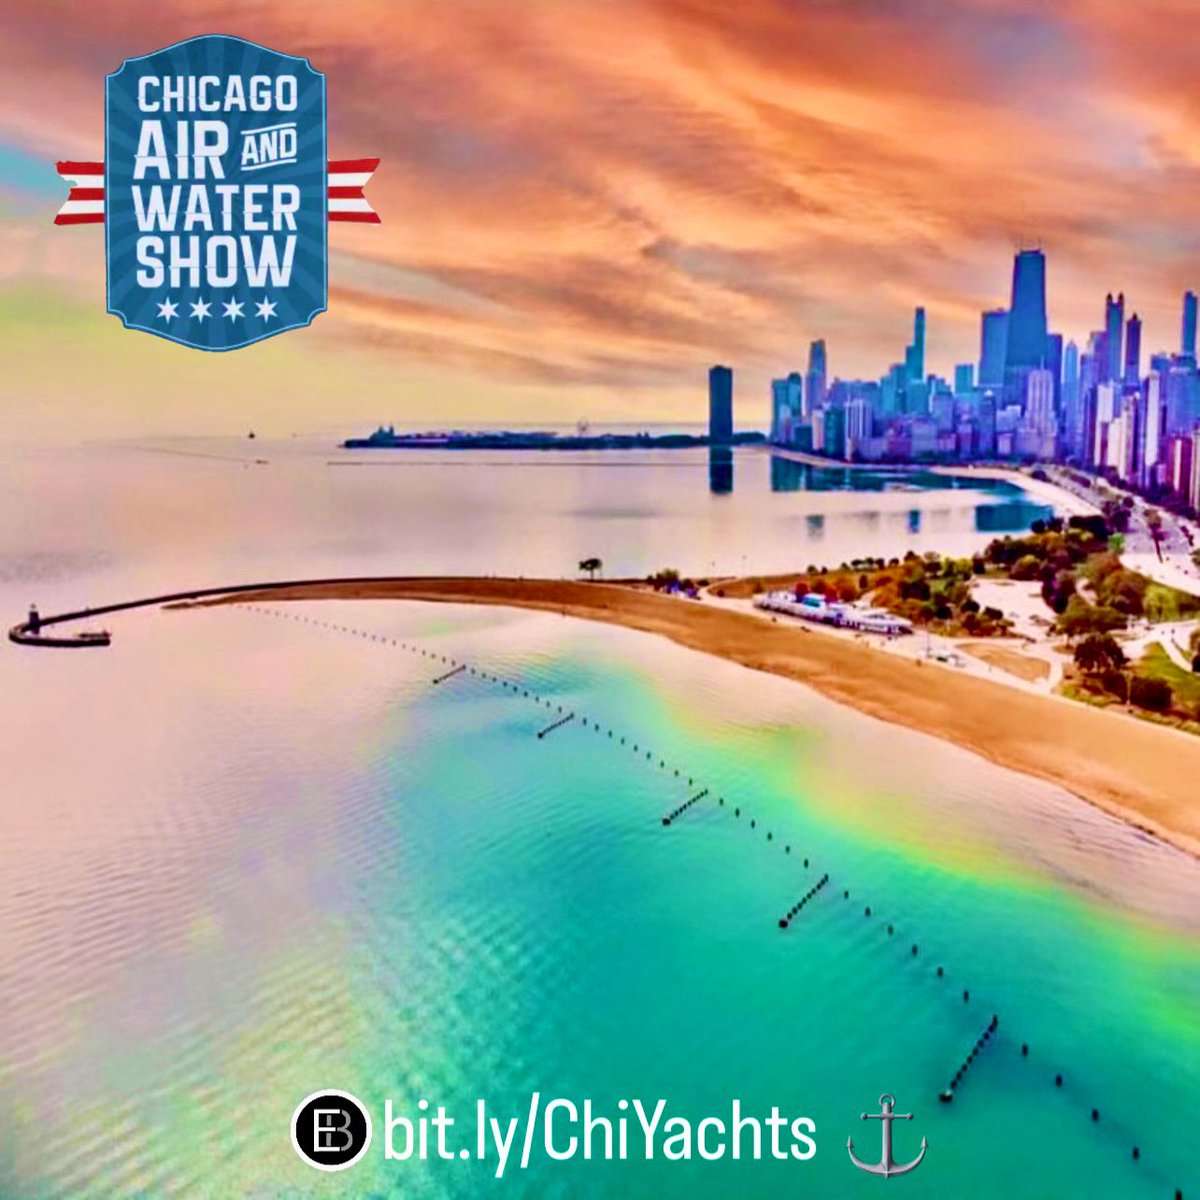 Experience the Chicago Air and Water Show with #EliteBrandsCo 👀  #ChicagoAirAndWaterShow #Chicago #YachtCharter #BoatCharter #ChicagoYachts #ChicagoBoats #LakeMichigan #PlaypenChicago #NorthAveBeach #ChicagoBoatScene #ChicagoEvents #ChicagoBoatParty #EliteExperience